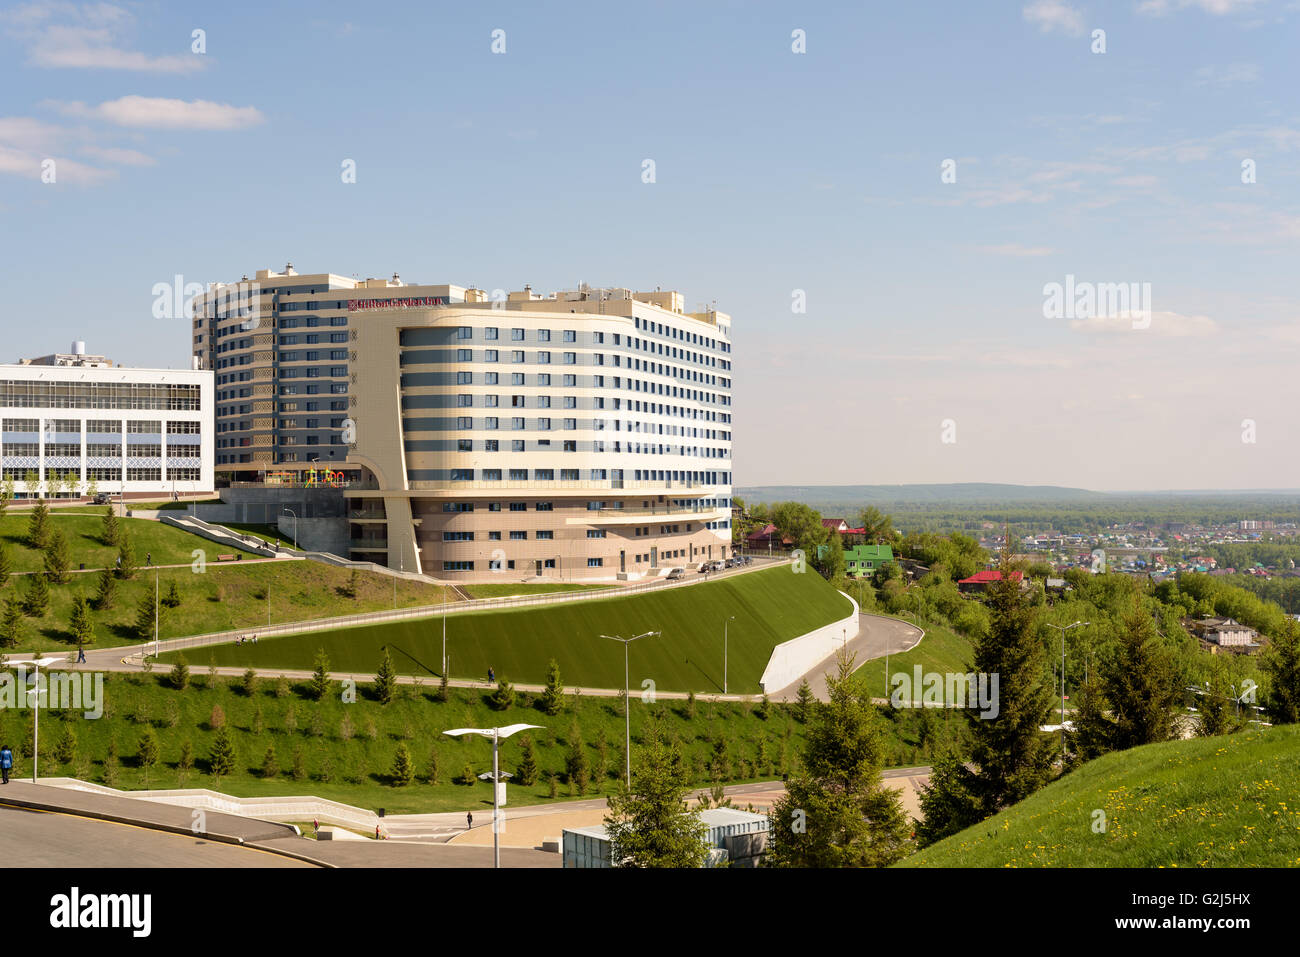 Die berühmte Hotelkette Hilton Garden Inn in Ufa, Republik Baschkortostan, Russland Stockfoto